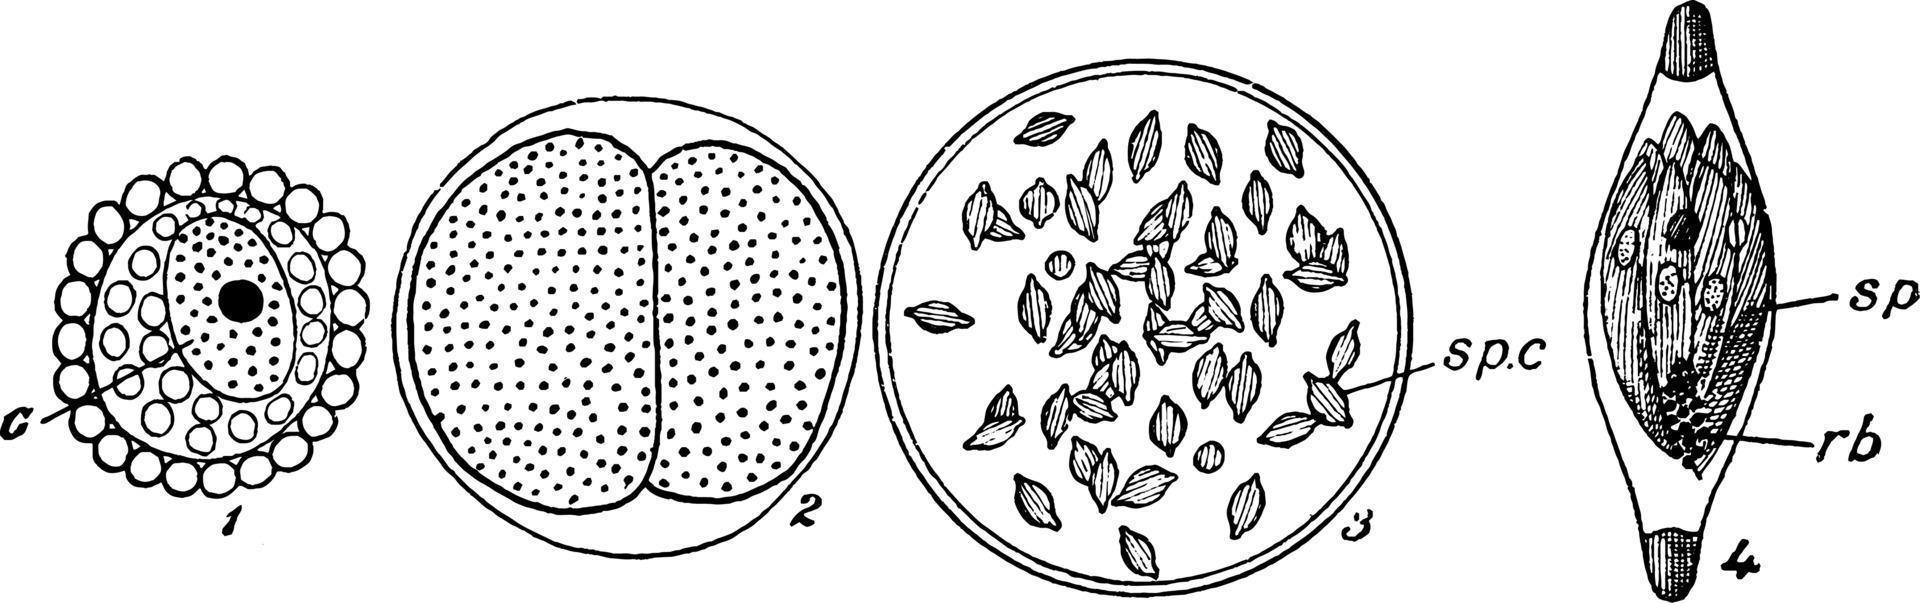 história de vida de monocystis monocystis, ilustração vintage. vetor